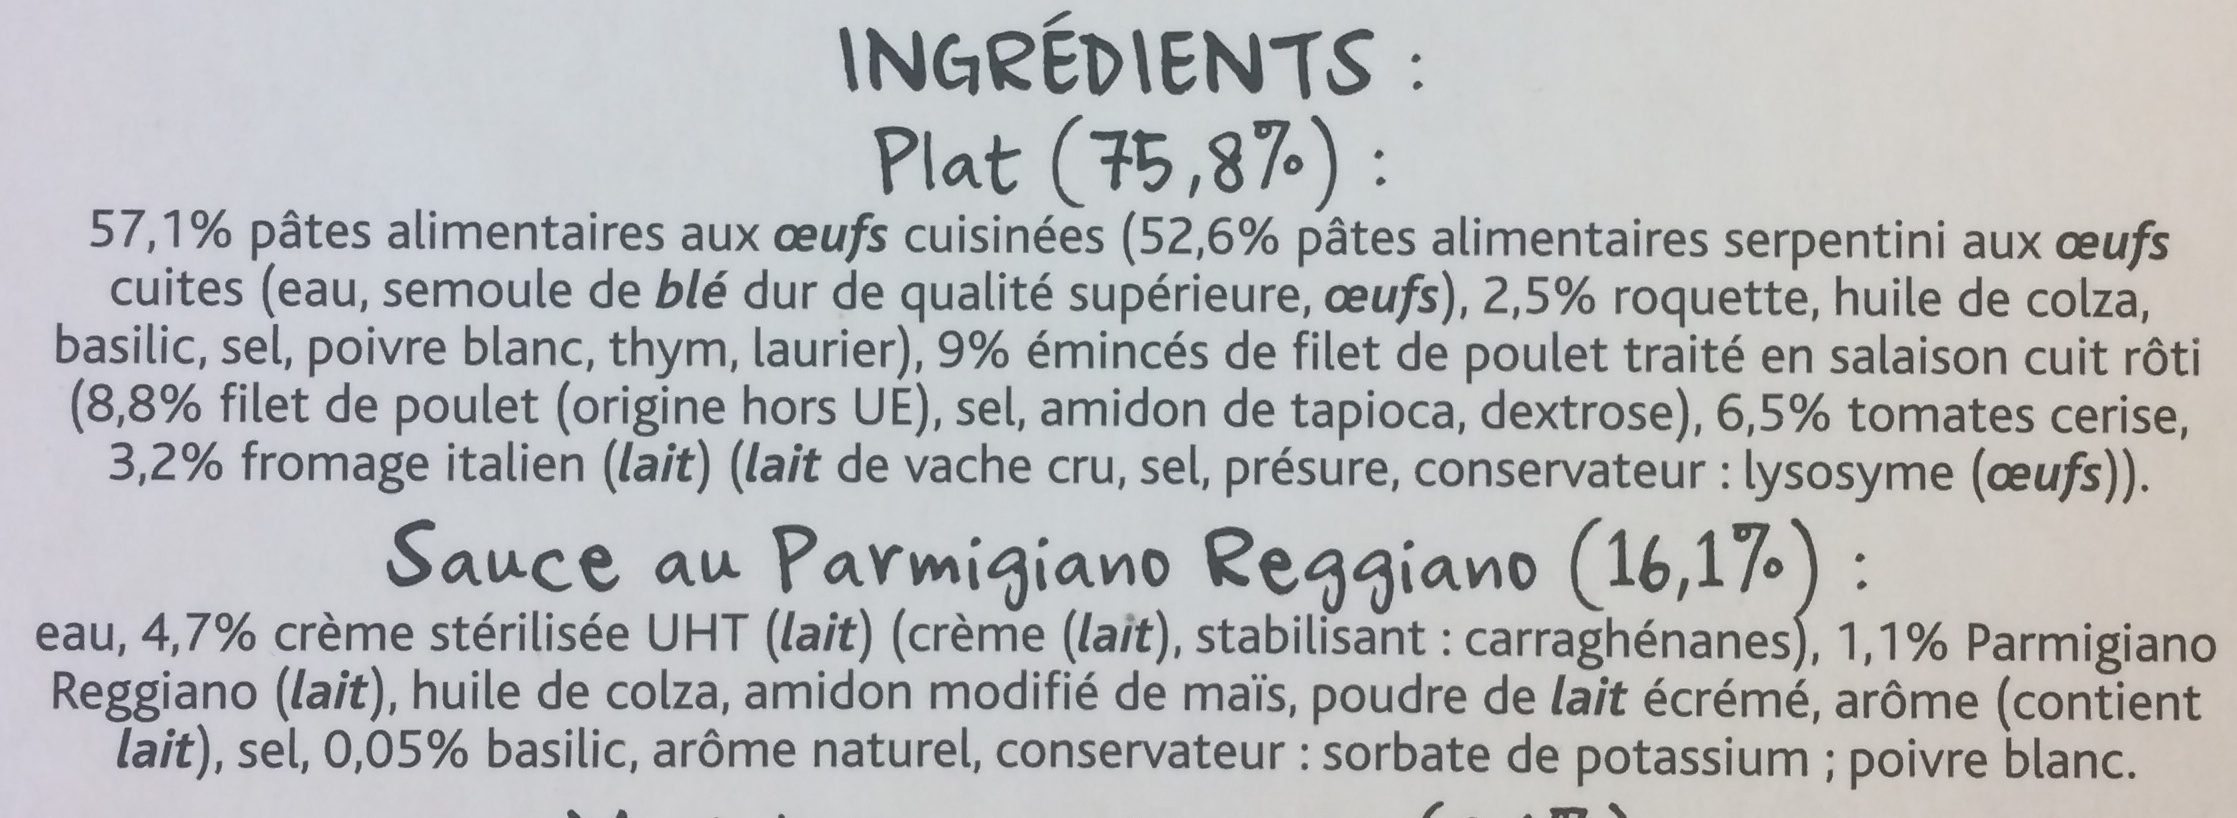 Serpentini poulet rôti roquette - Ingredientes - fr